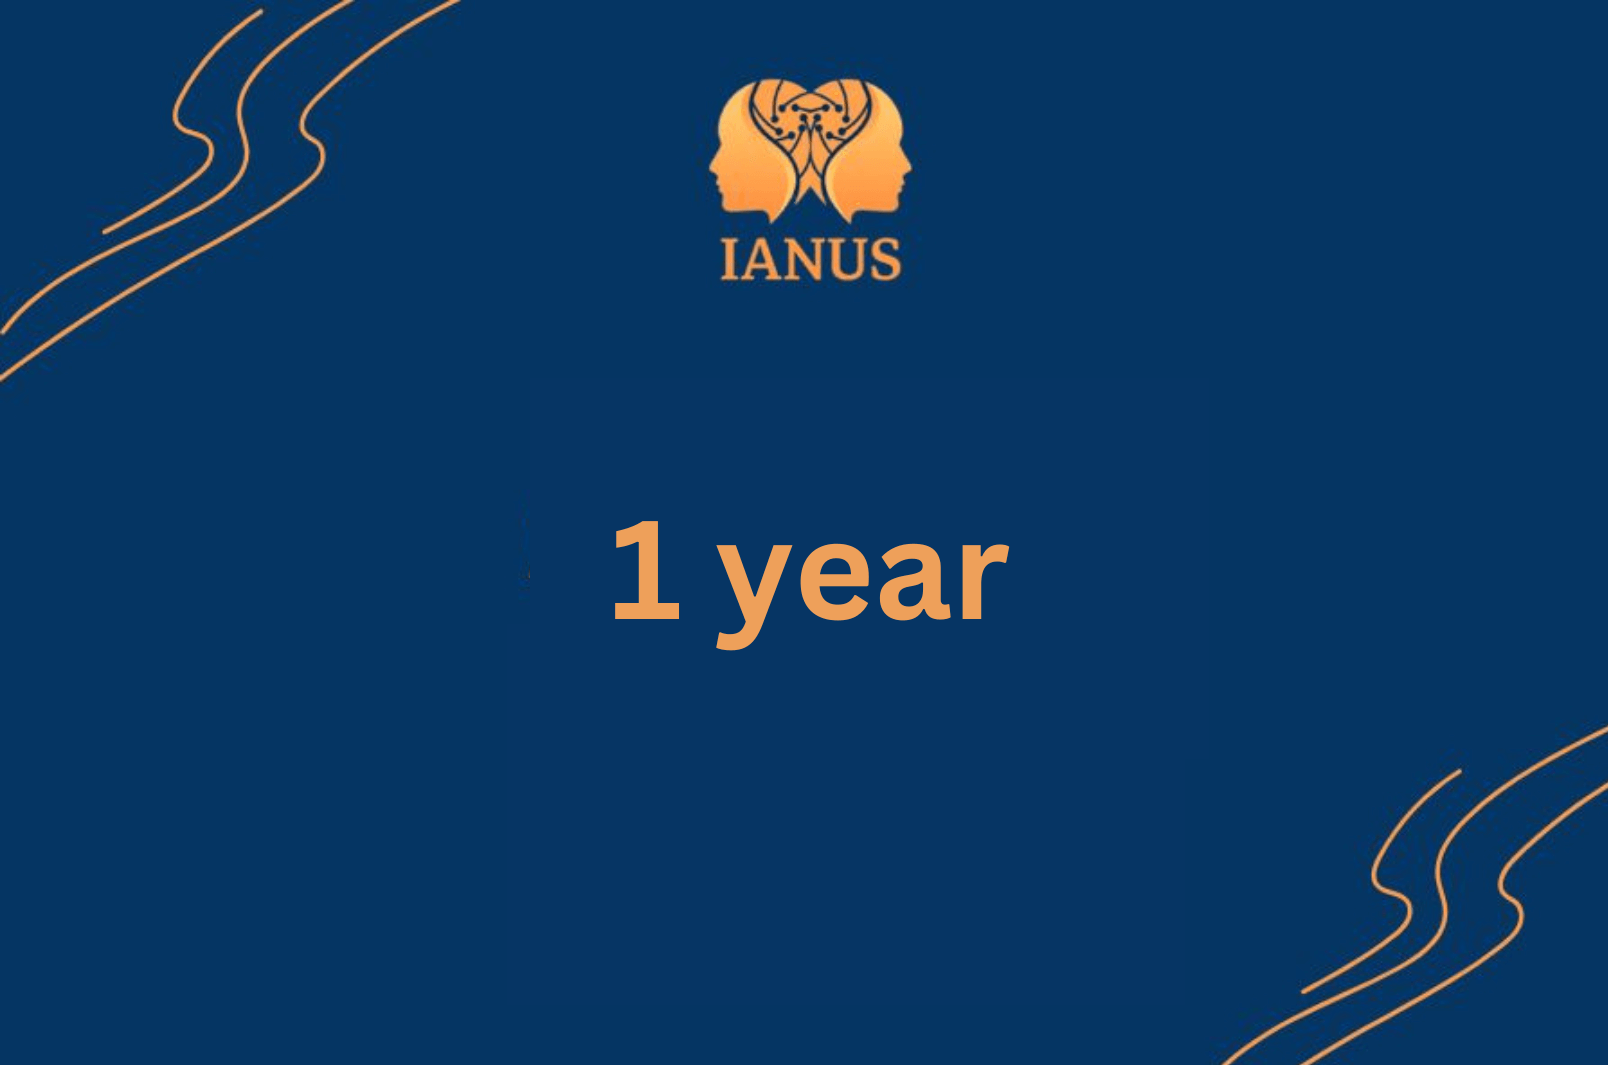 IANUS - 1 year